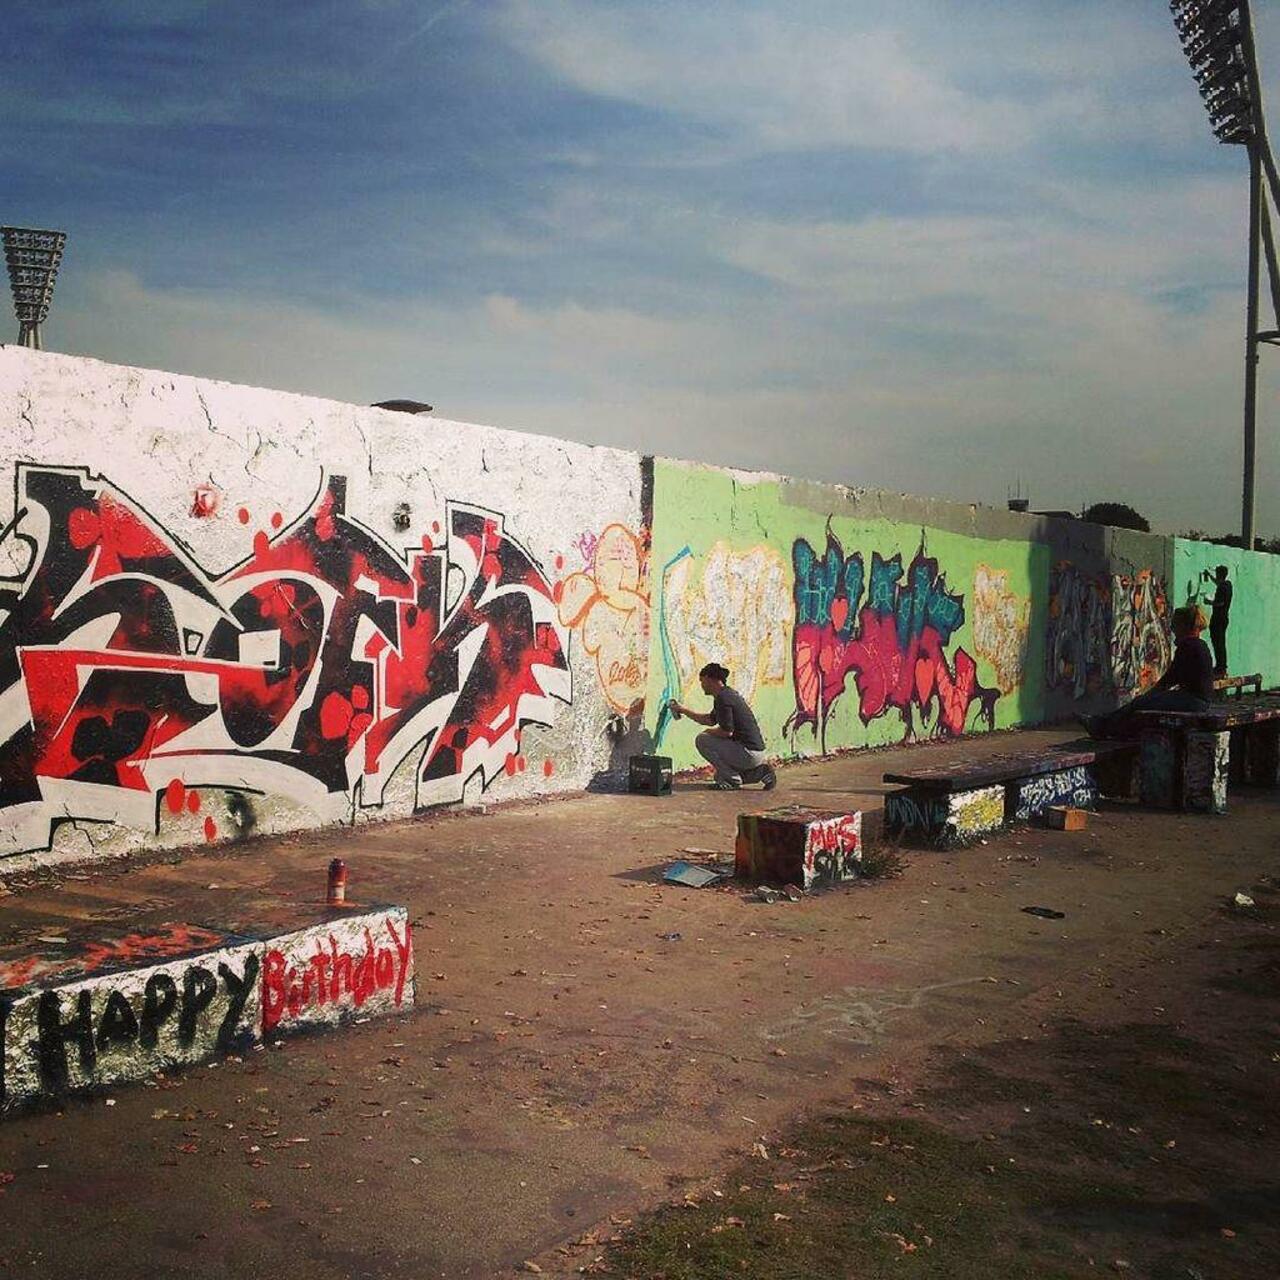 RT @artpushr: via #andy_hearty "http://bit.ly/1VA7aF0" #graffiti #streetart http://t.co/5RBE2J9DiK